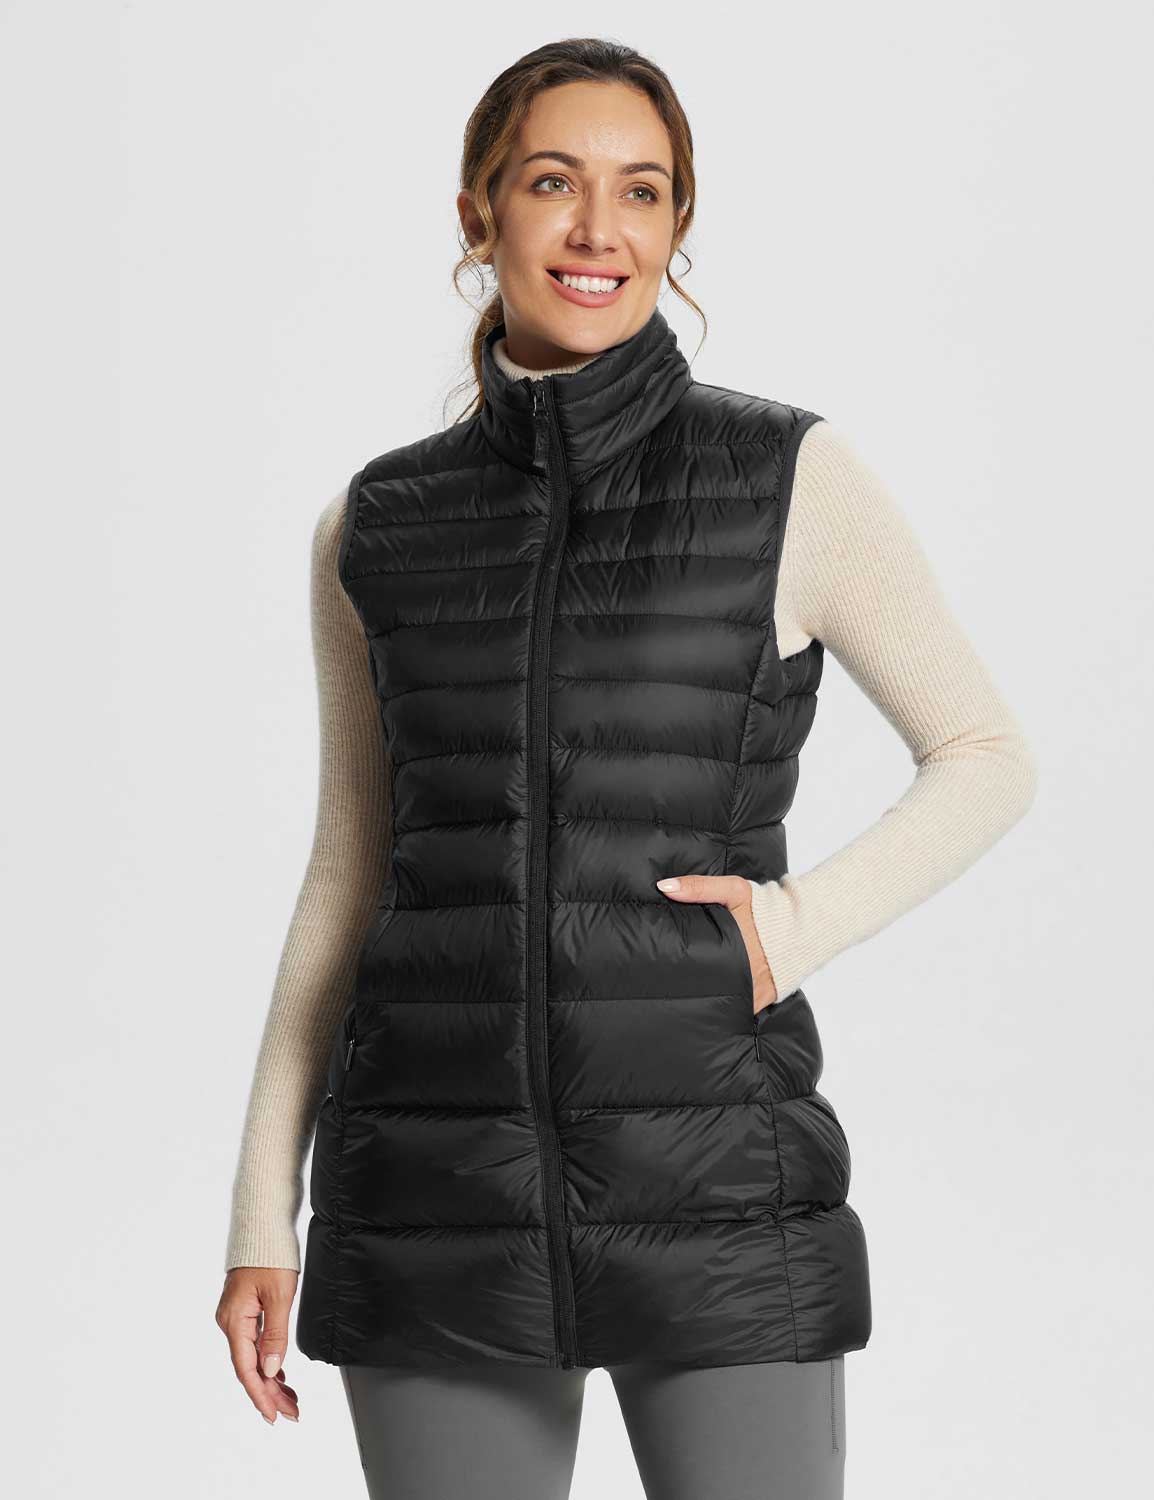 Baleaf Women's Water-Resistant Puffer Sleeveless Jacket dga070 Black Main